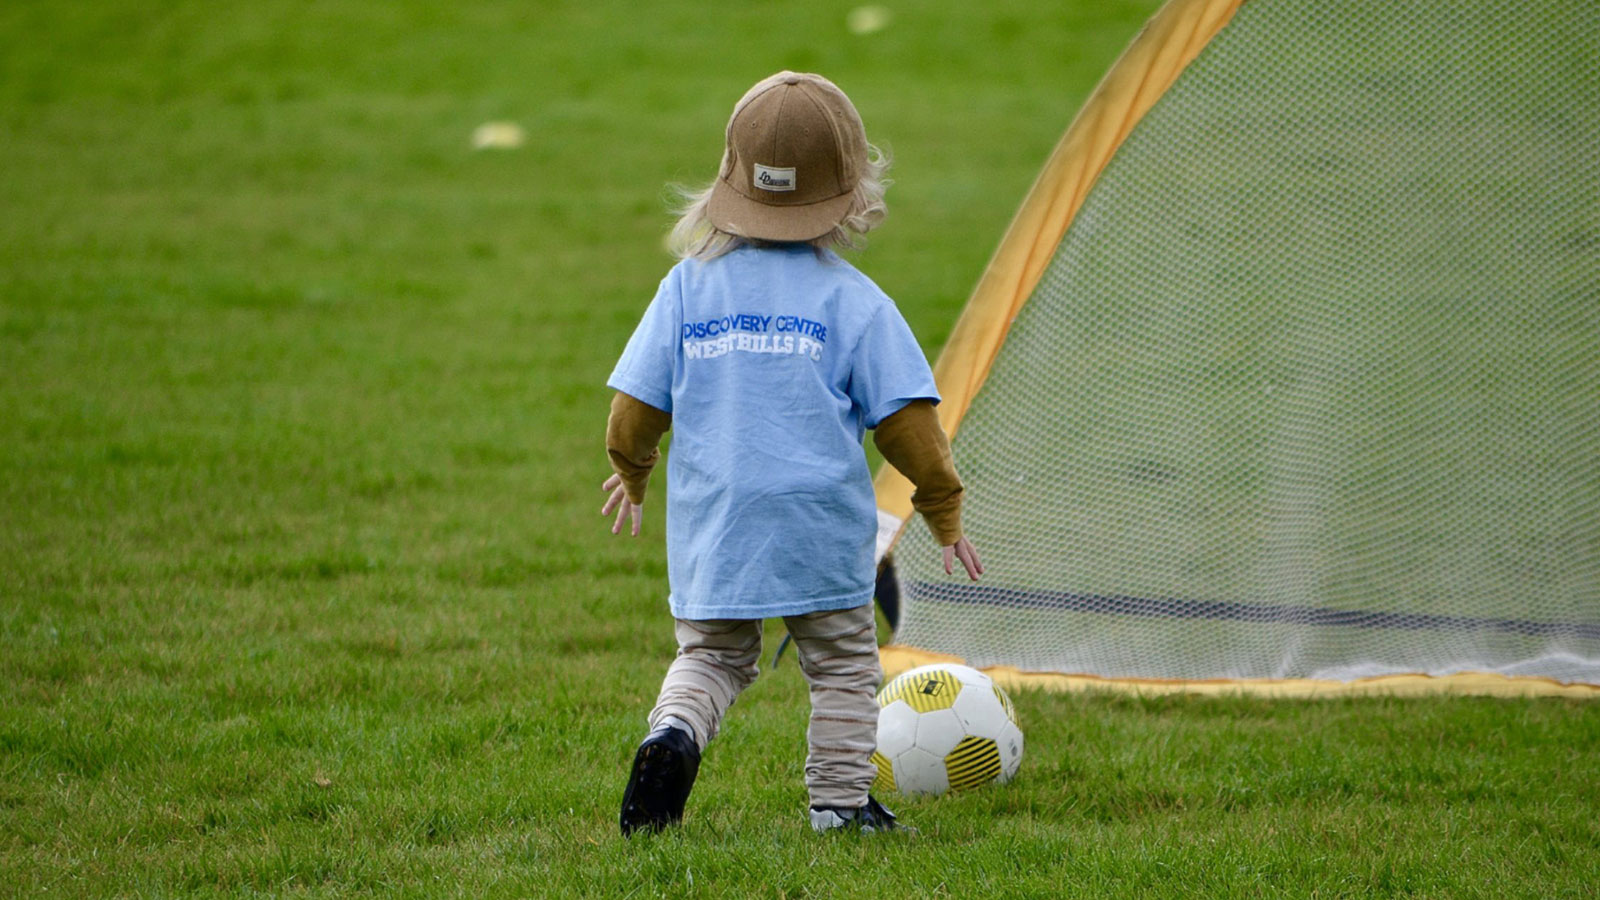 Westhills FC, Child kicking soccer ball